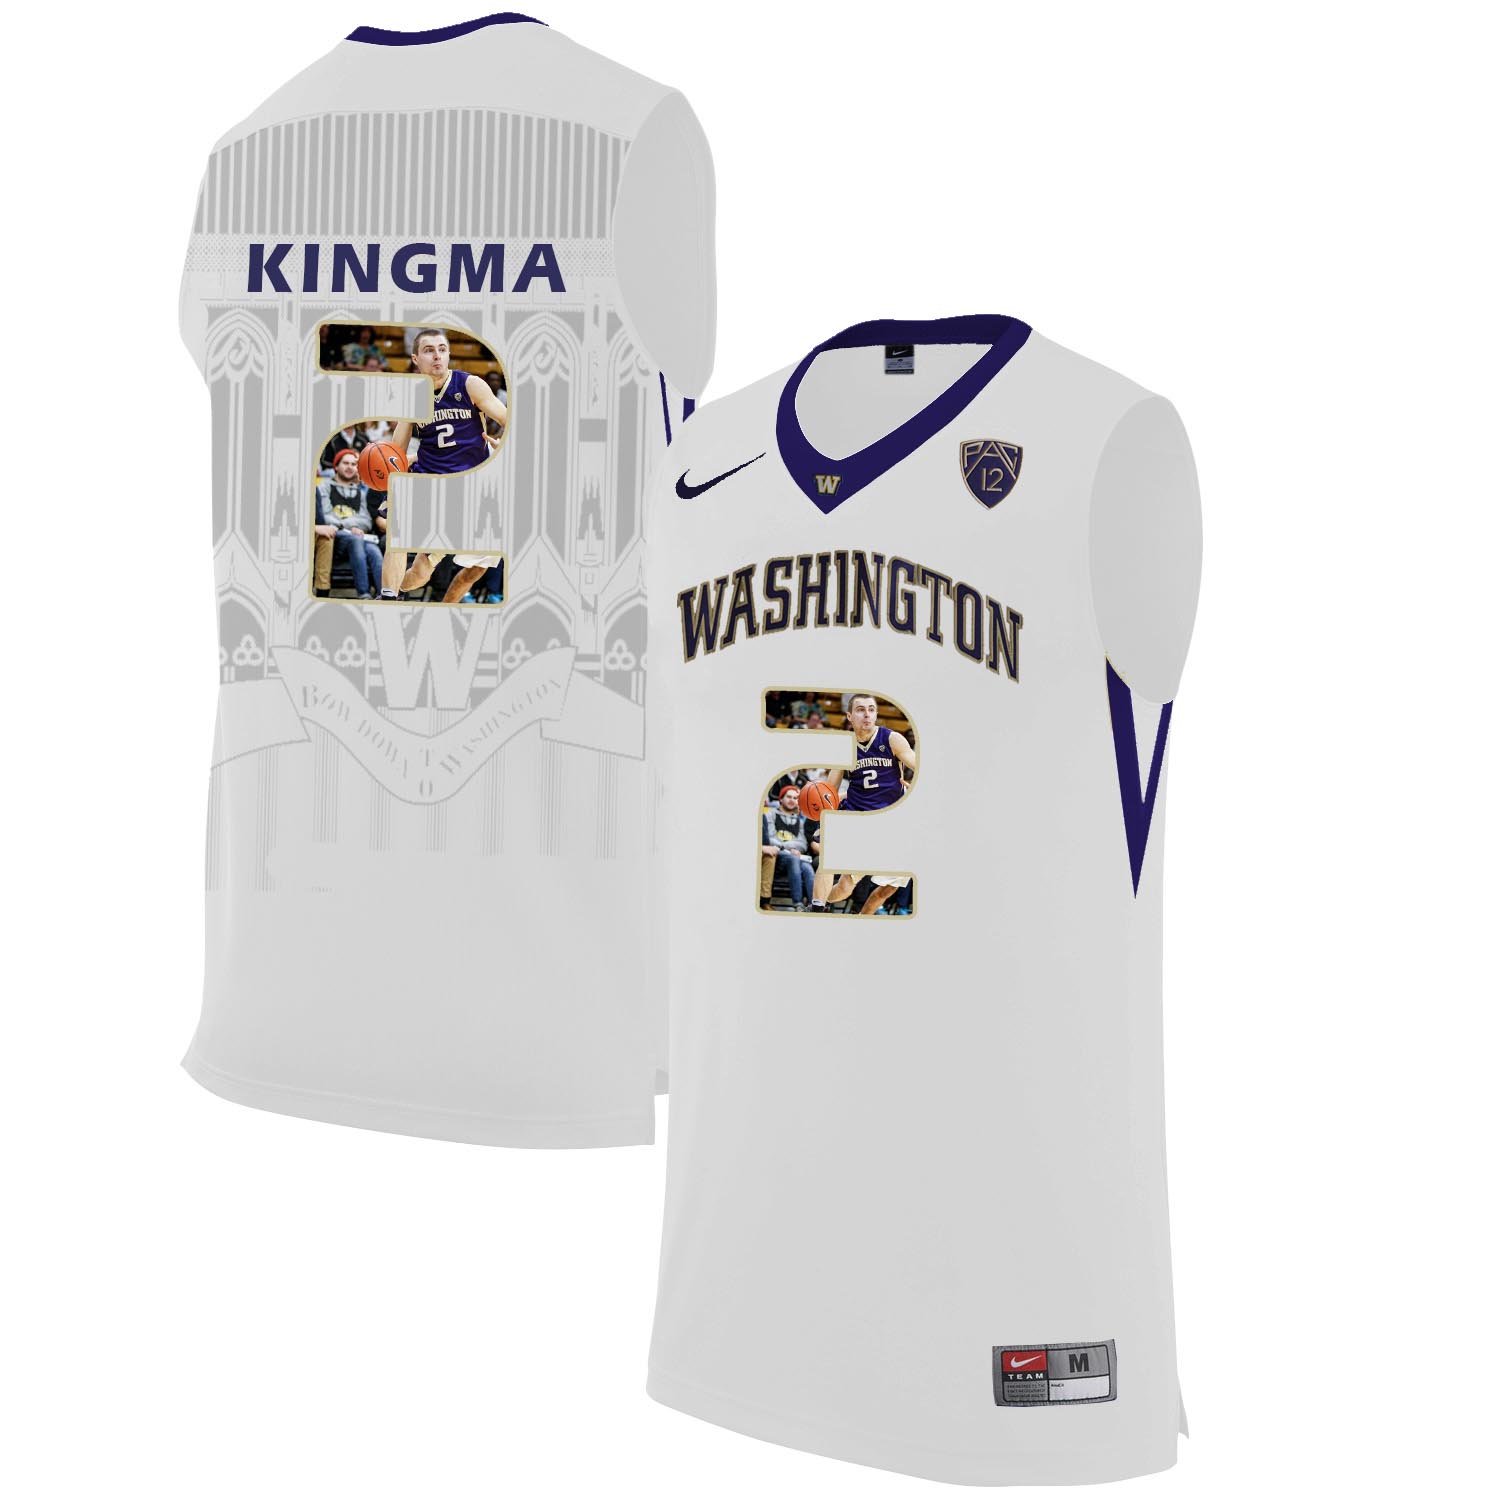 Washington Huskies 2 Dan Kingma White With Portait College Basketball Jersey